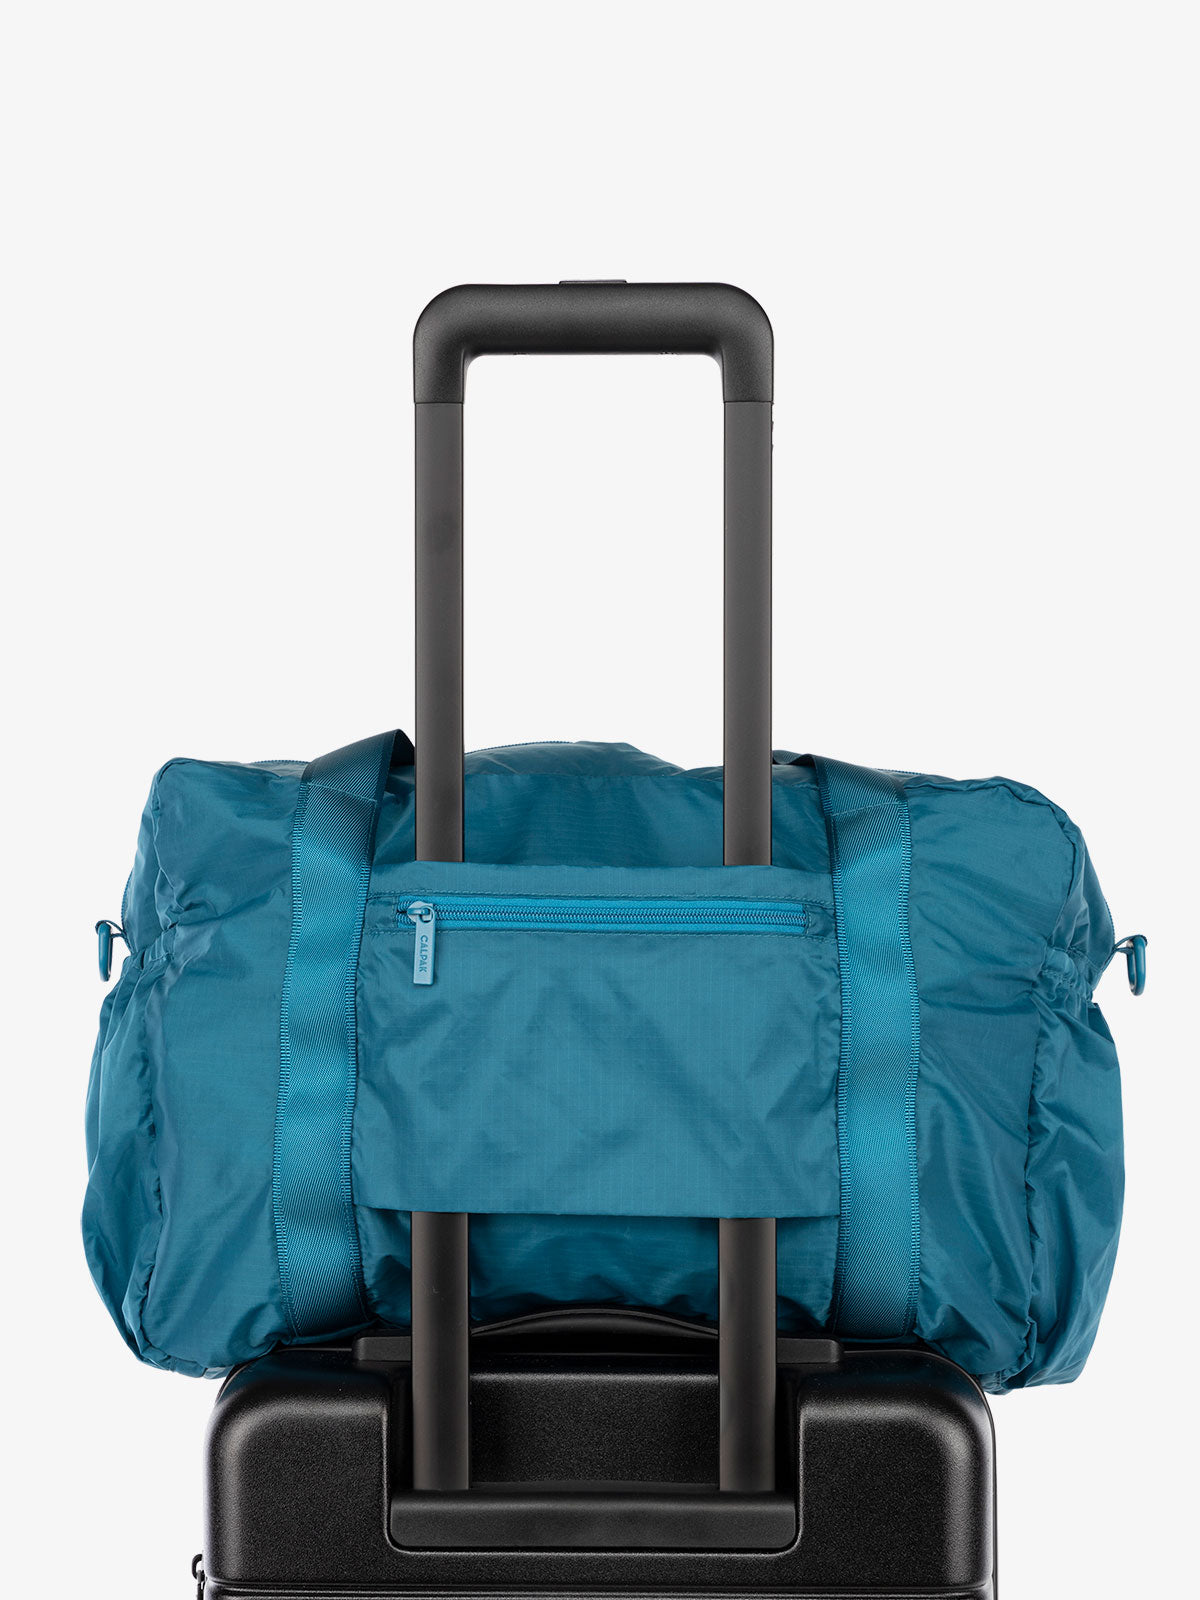 CALPAK Compakt nylon duffle bag with trolley sleeve in blue